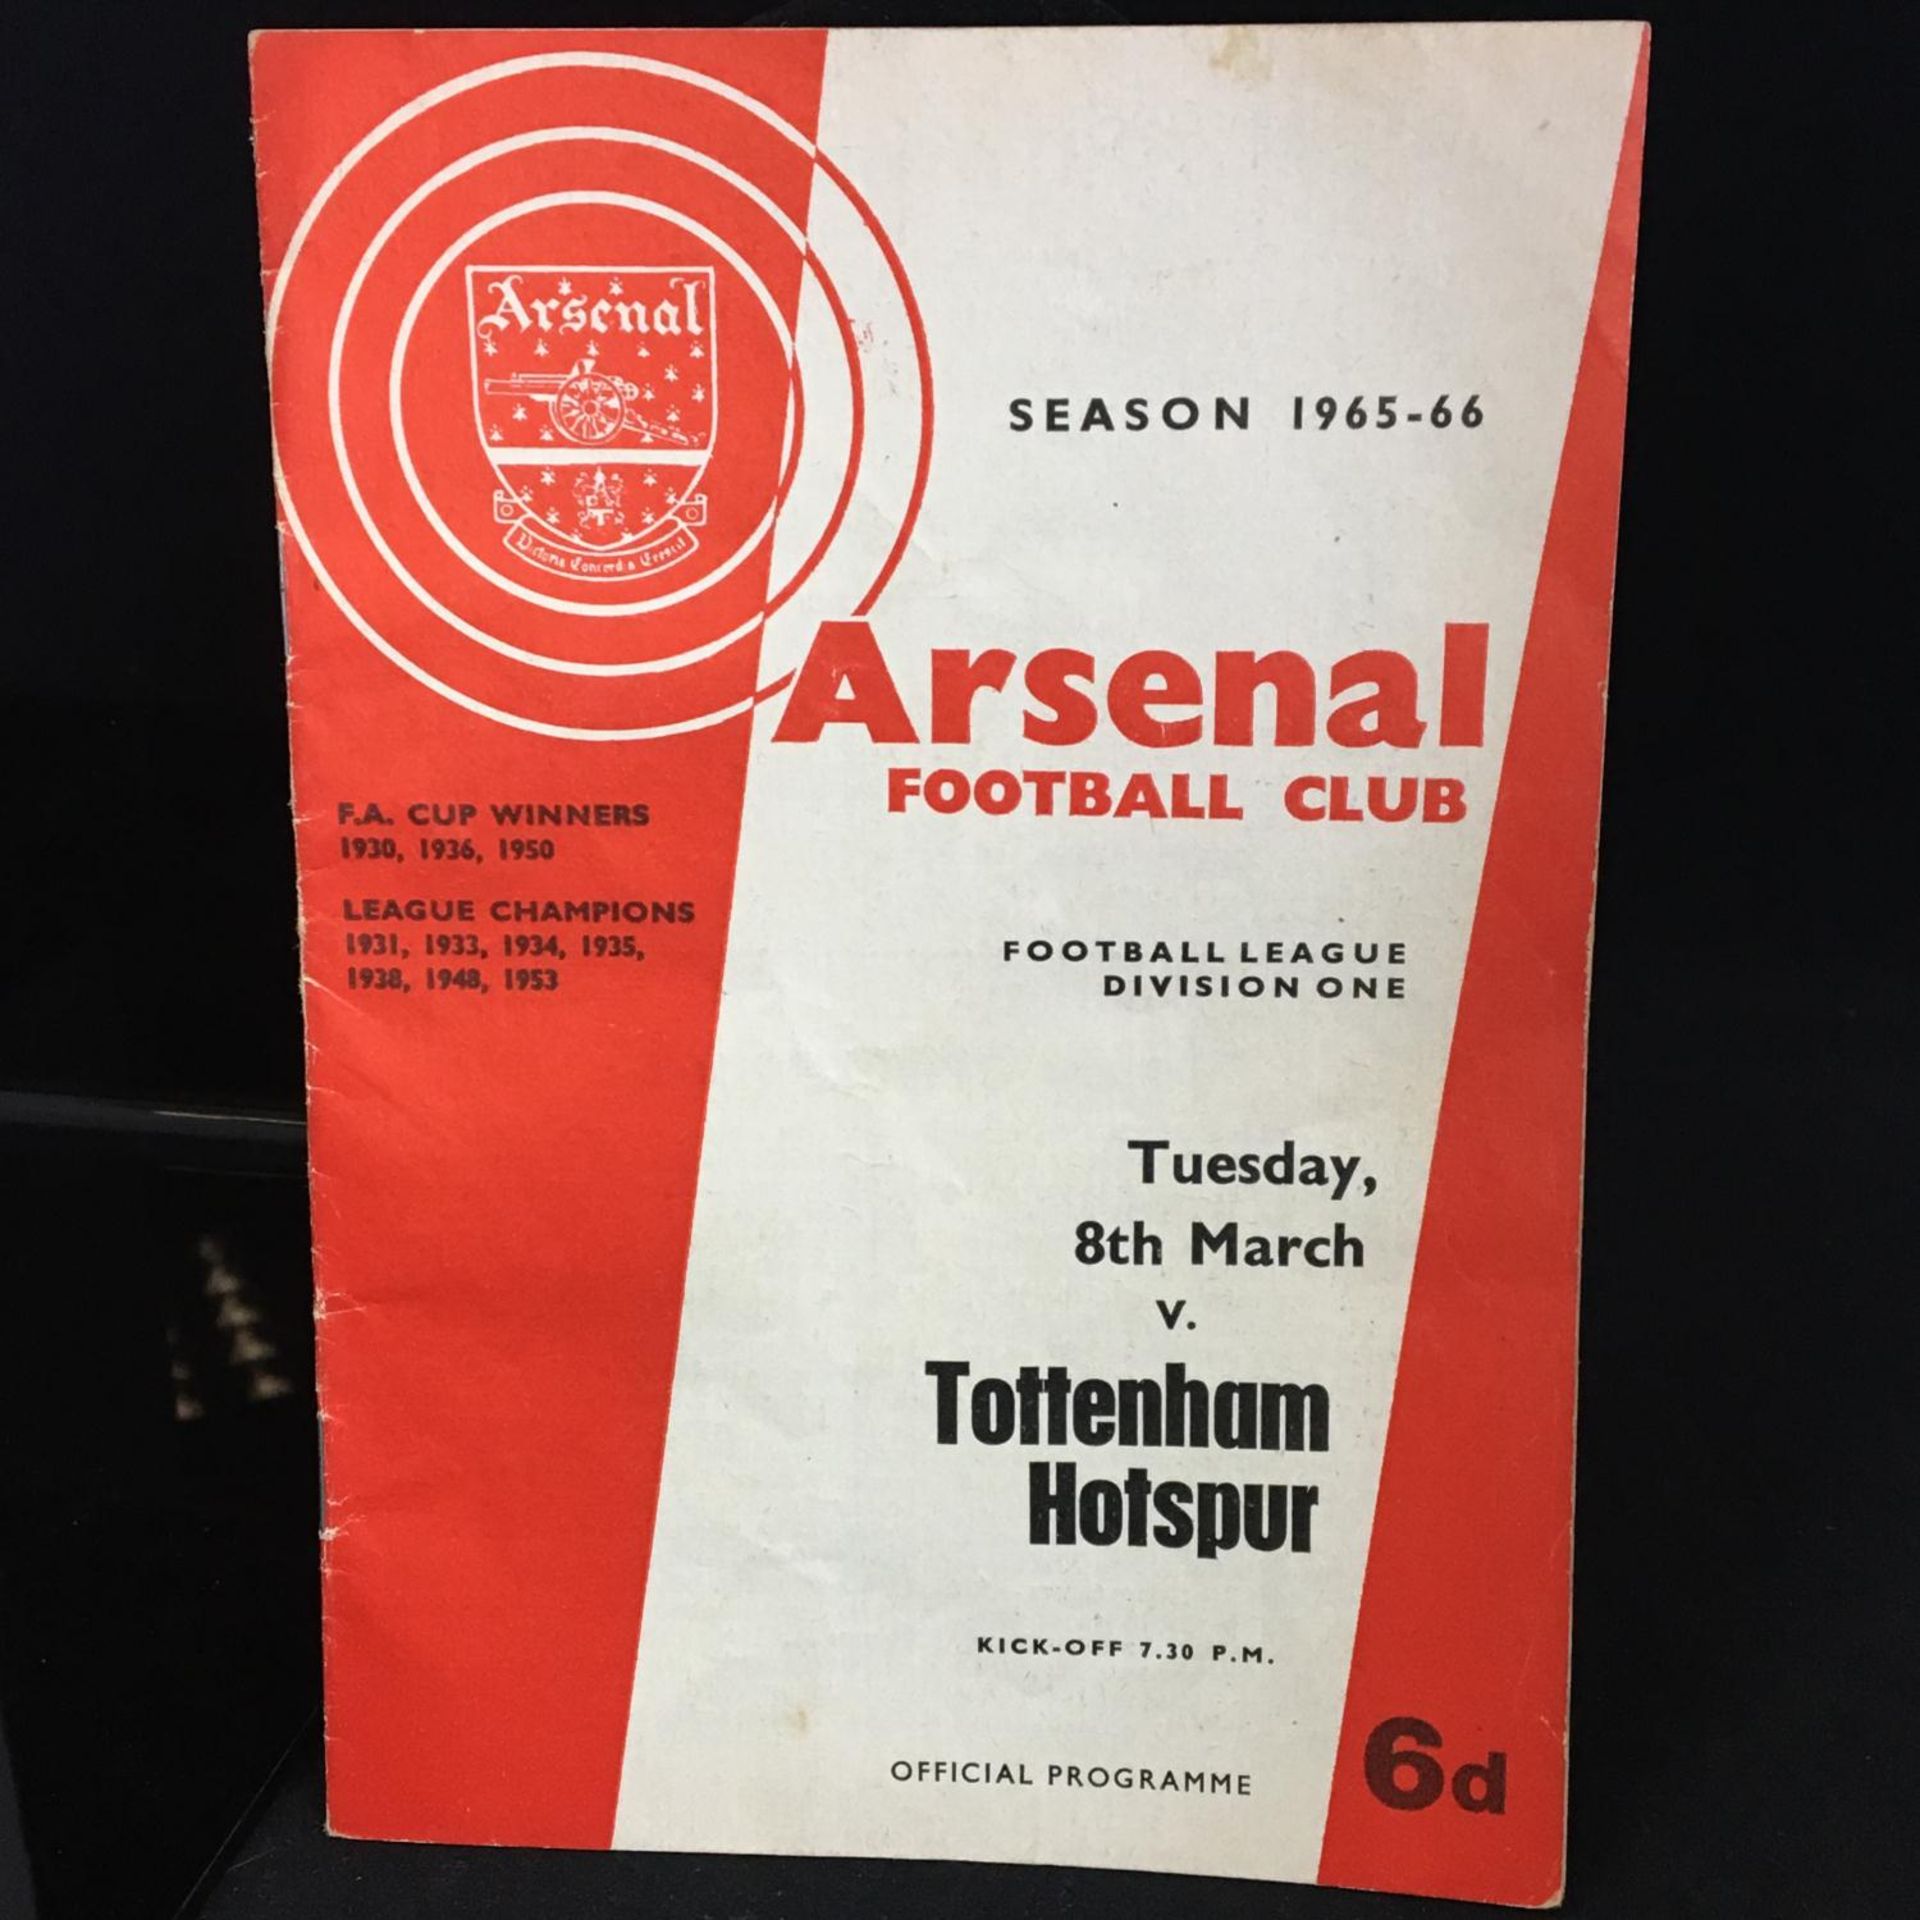 1965-1966 Arsenal Football Club Official Programme (v. Tottenham Hotspur). Original 16 page